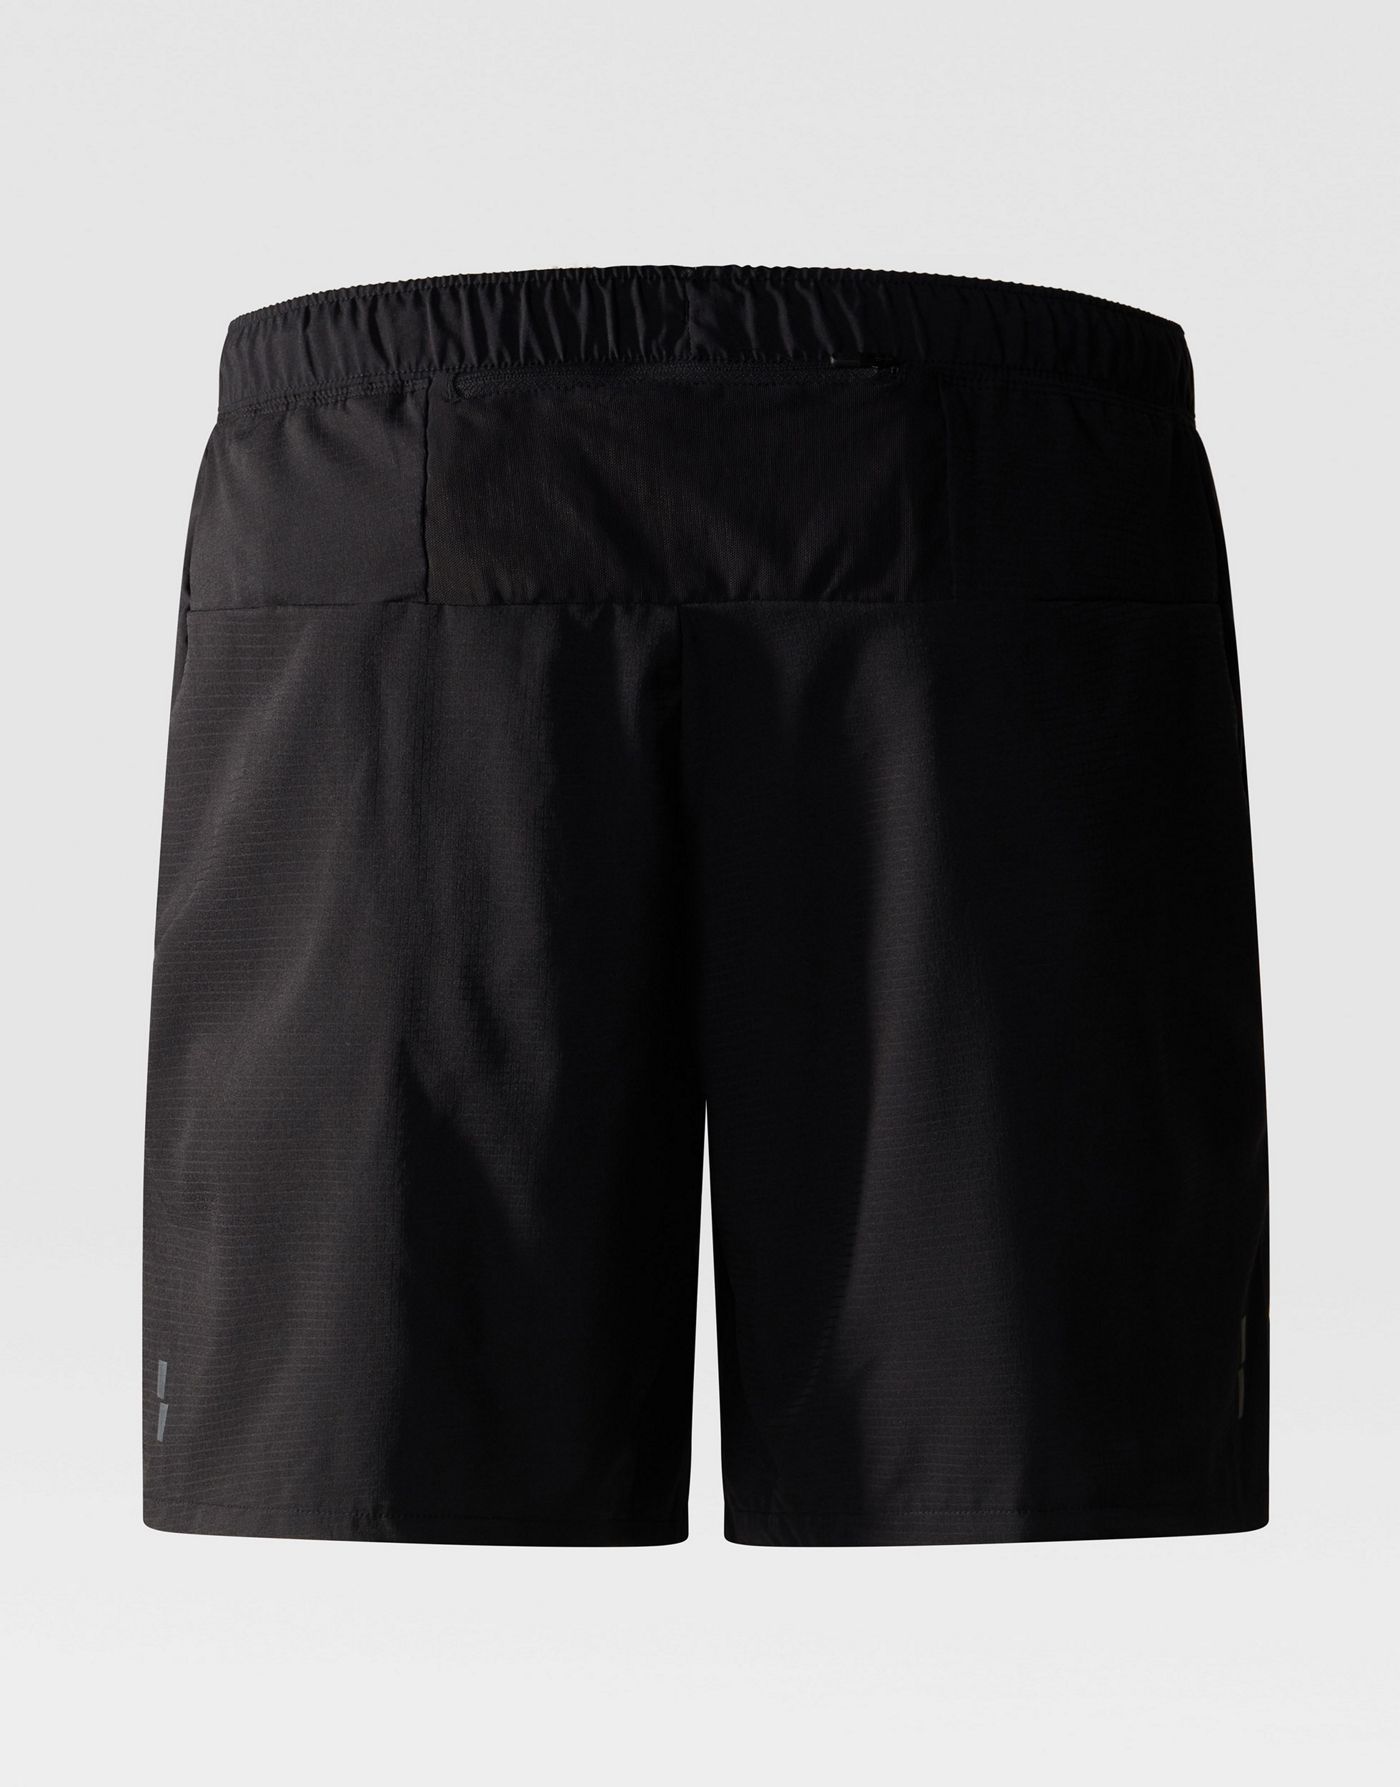 The North Face Sunriser brief shorts in black